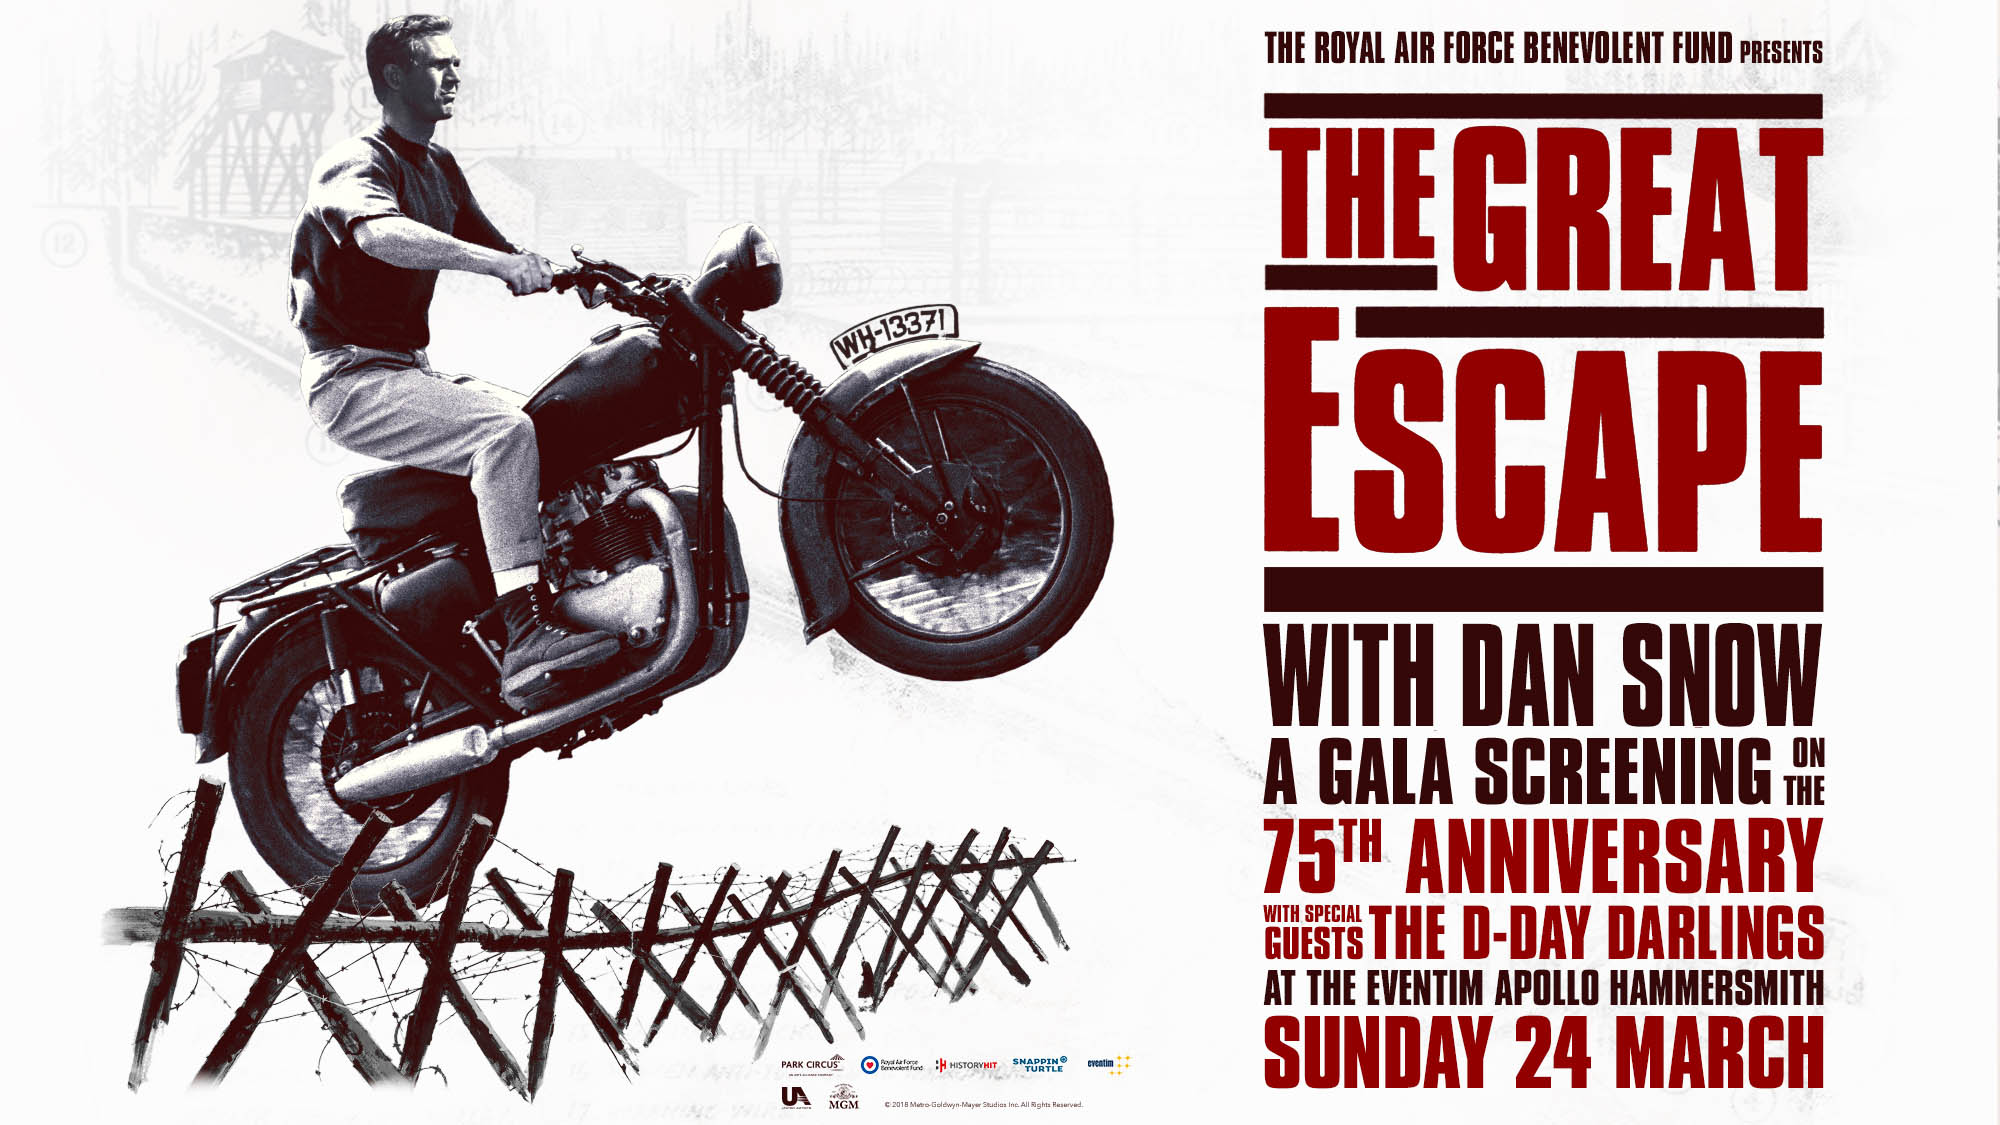 The Great Escape event